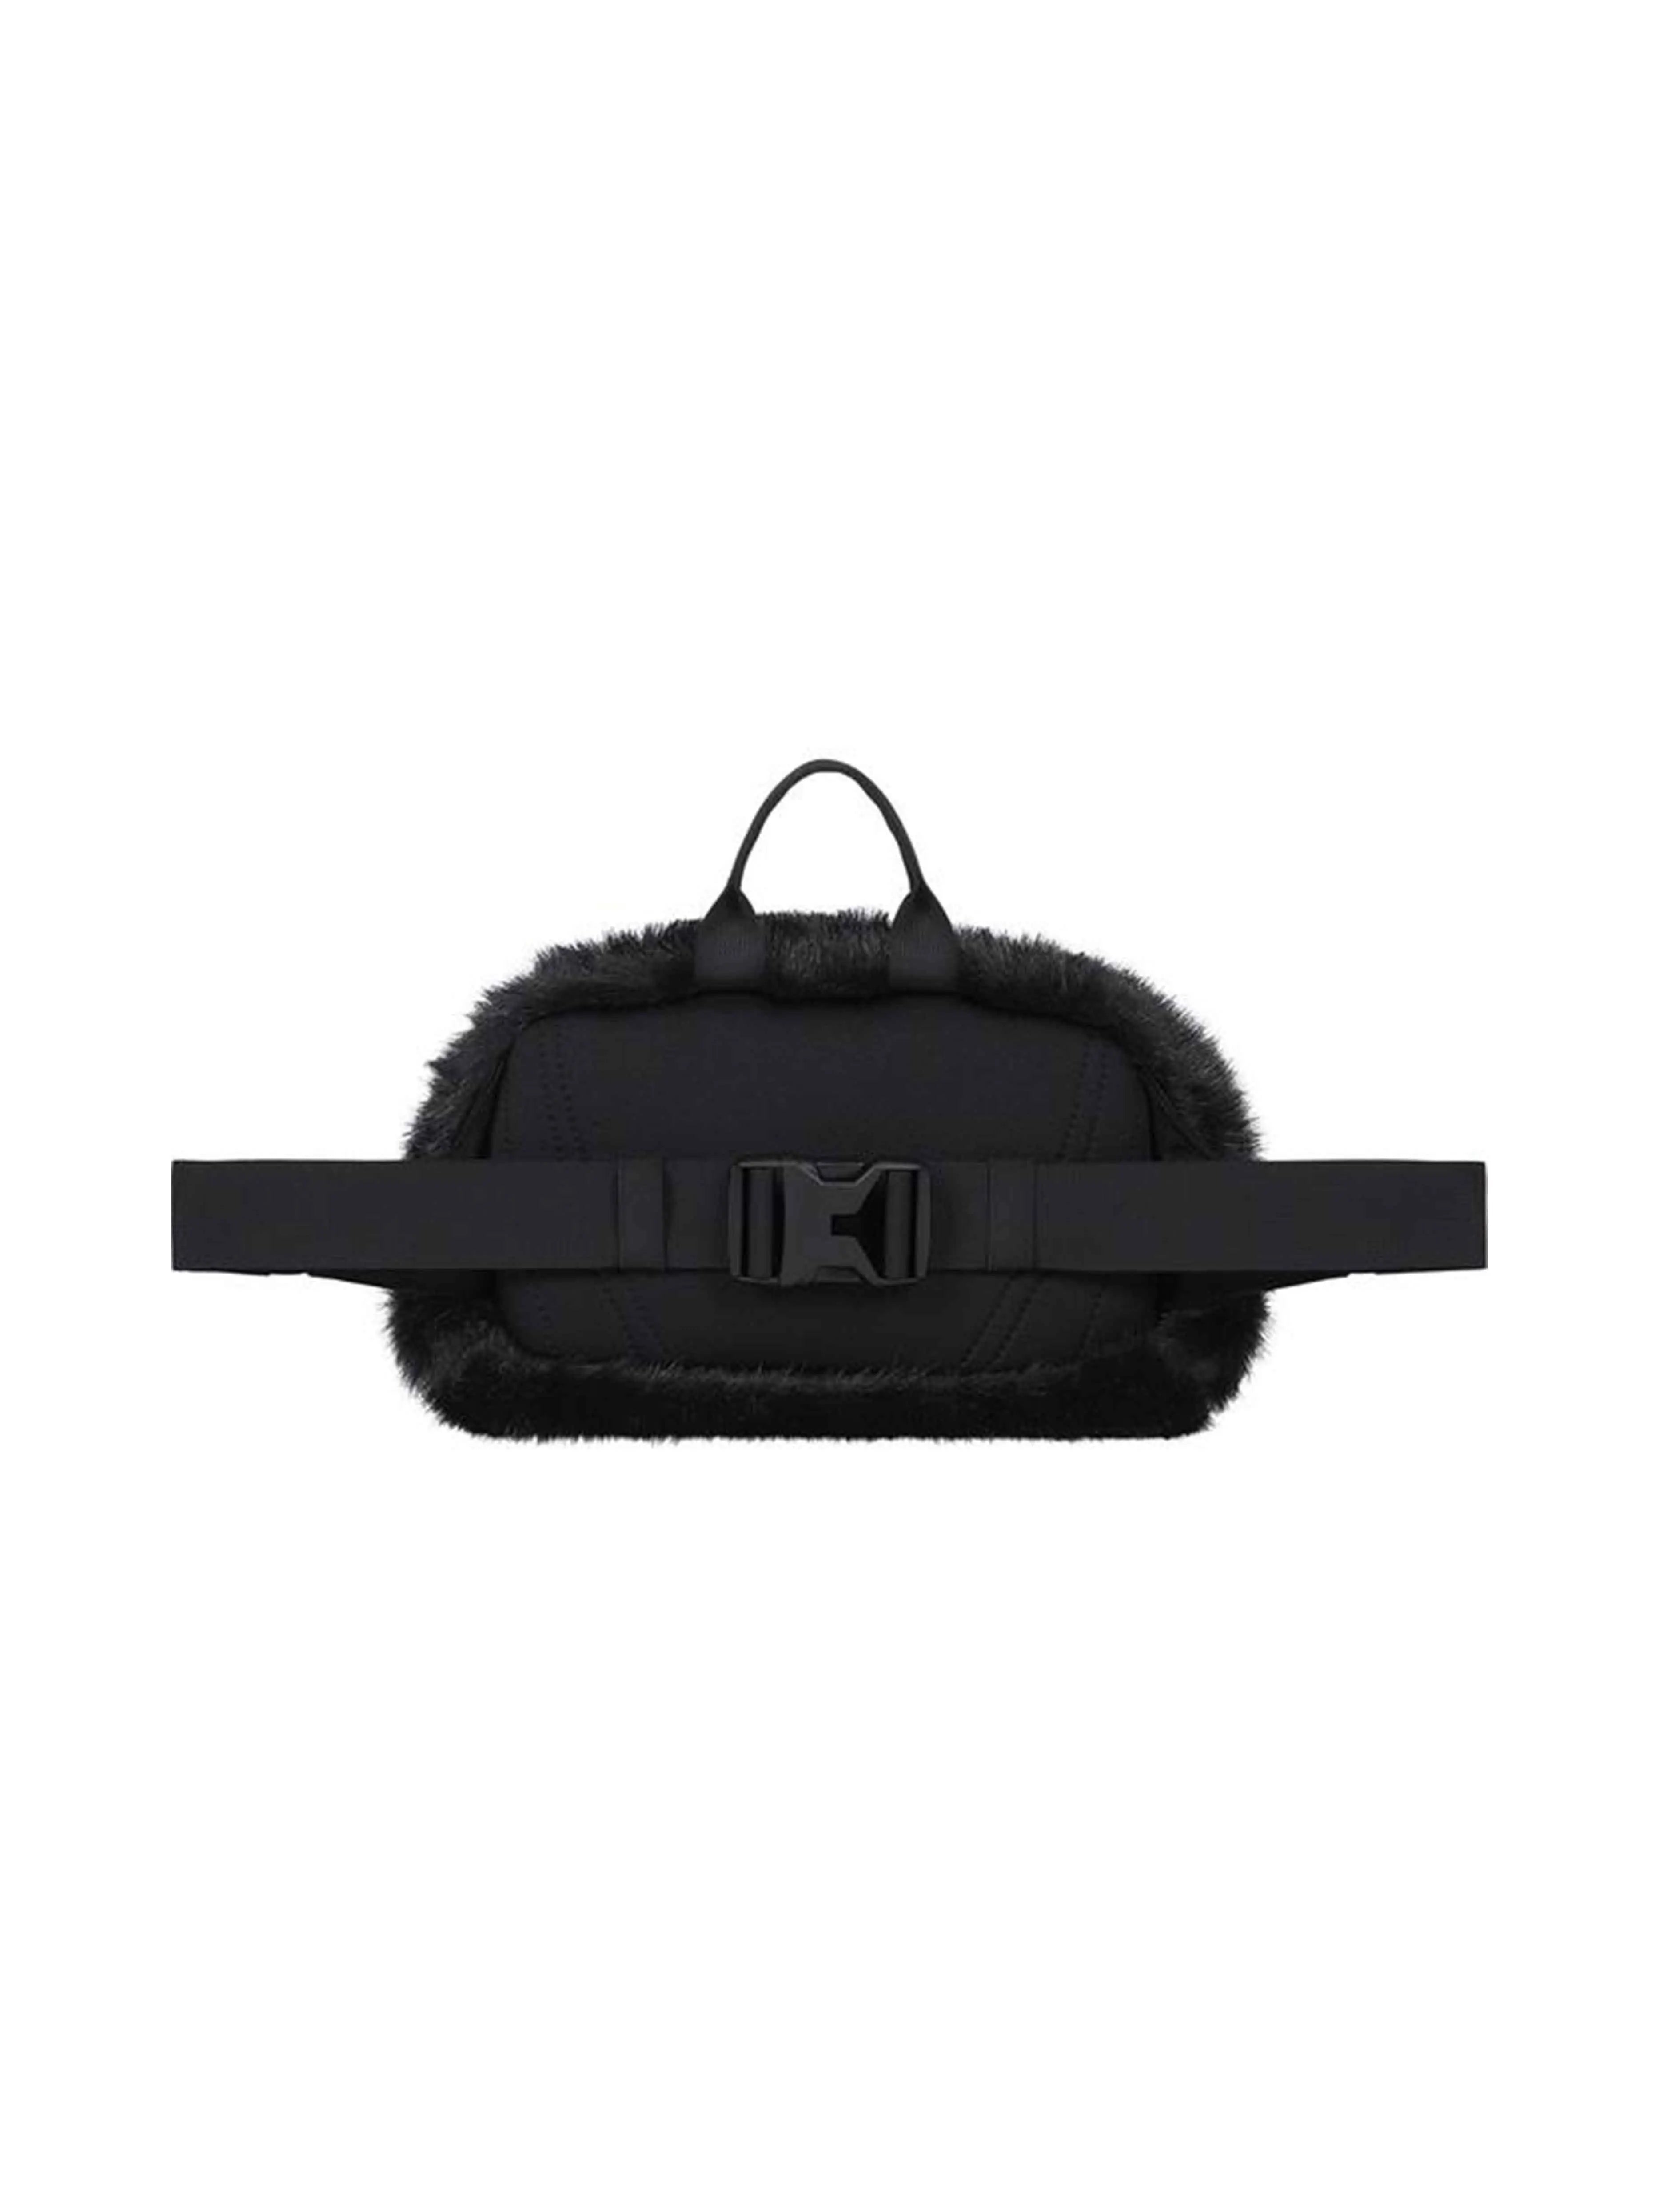 Buy Supreme X The North Face Faux Fur Waist Bag Black [FW20